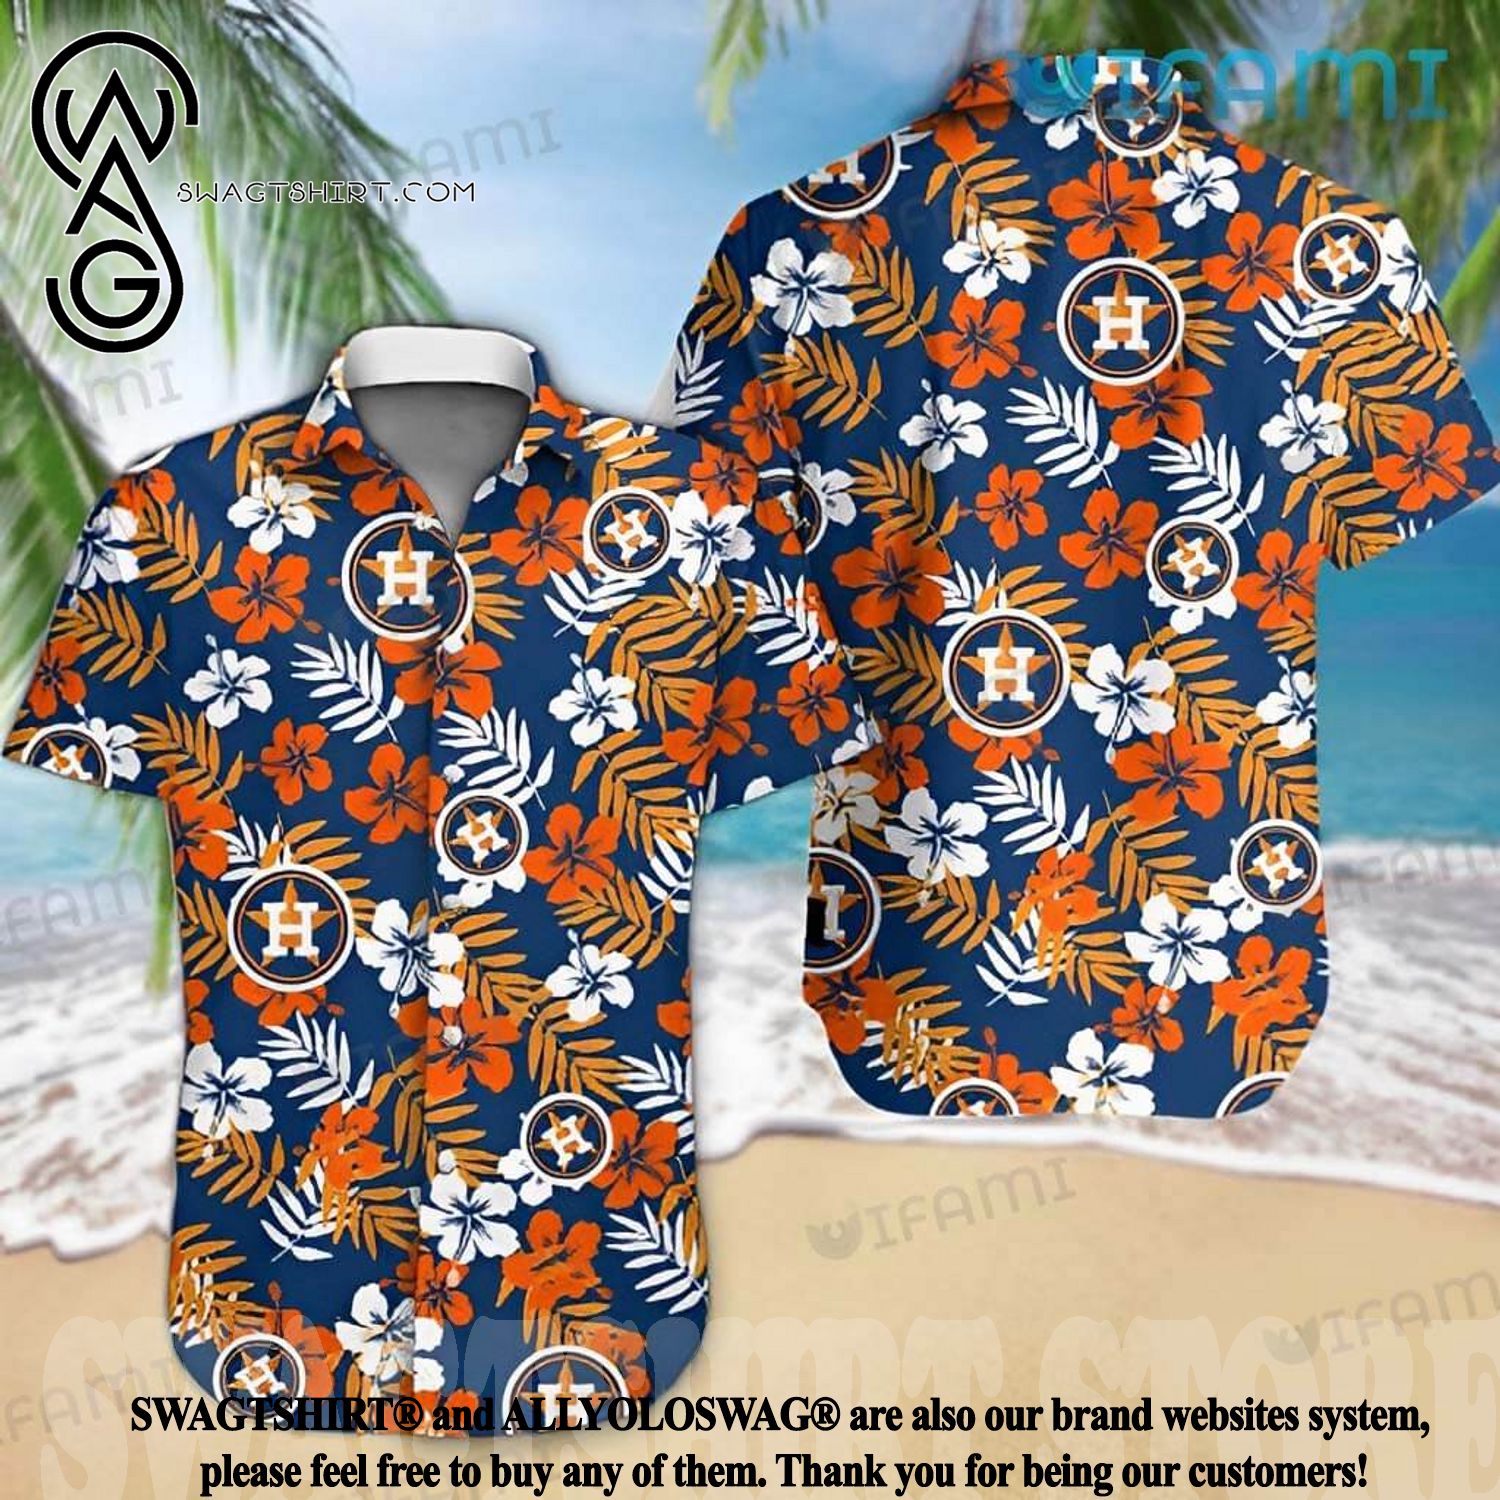 Houston Astros Collection Floral Hawaiian Shirt - Tagotee